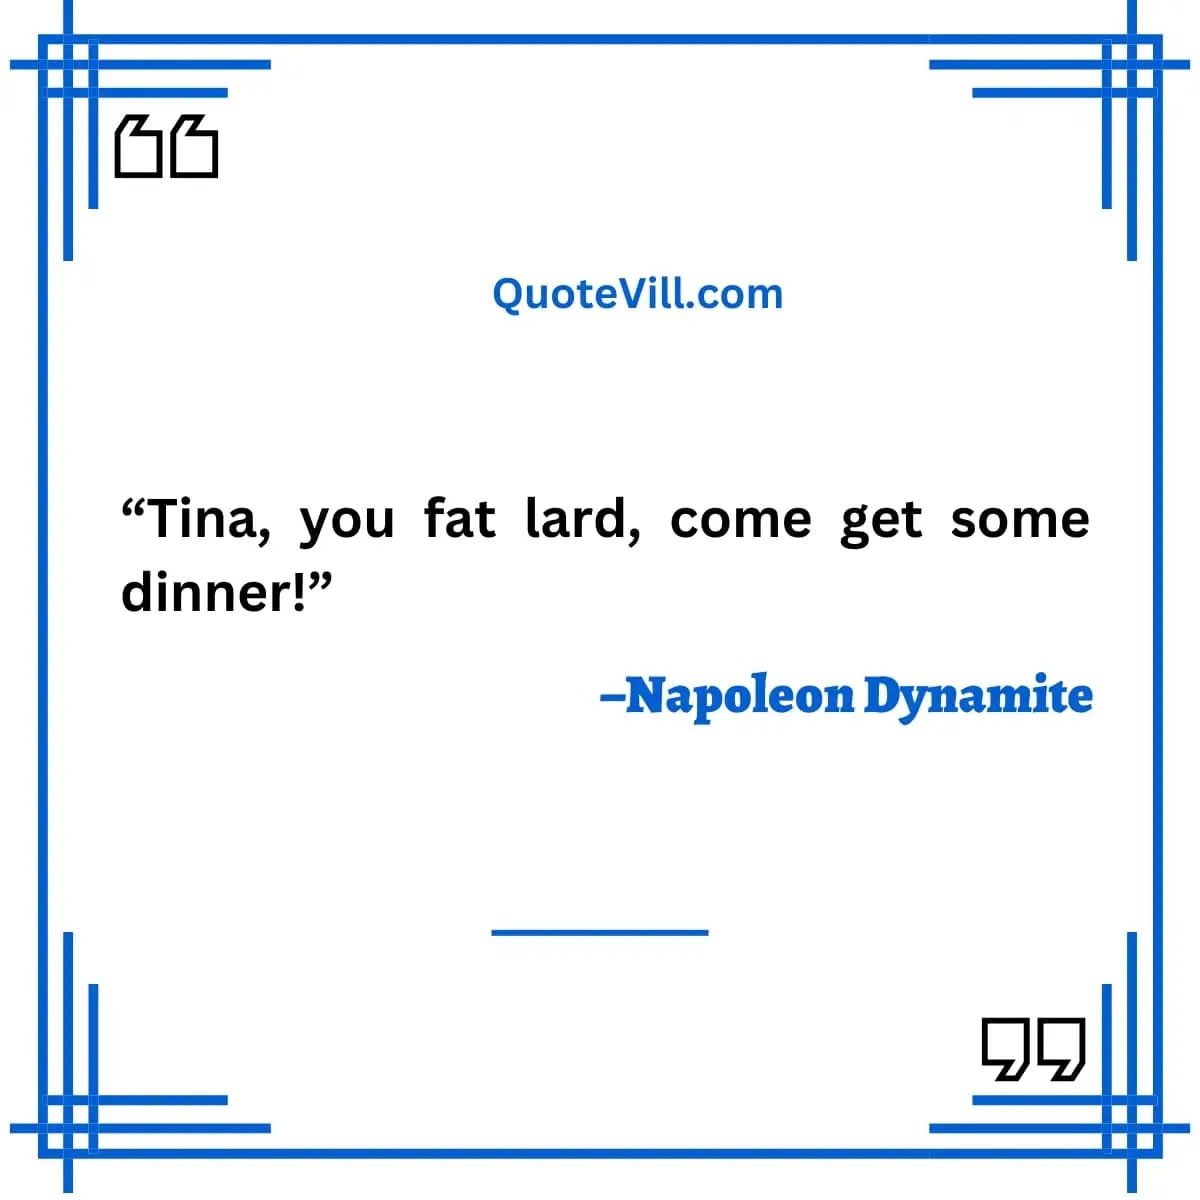 Napoleon Dynamite quotes